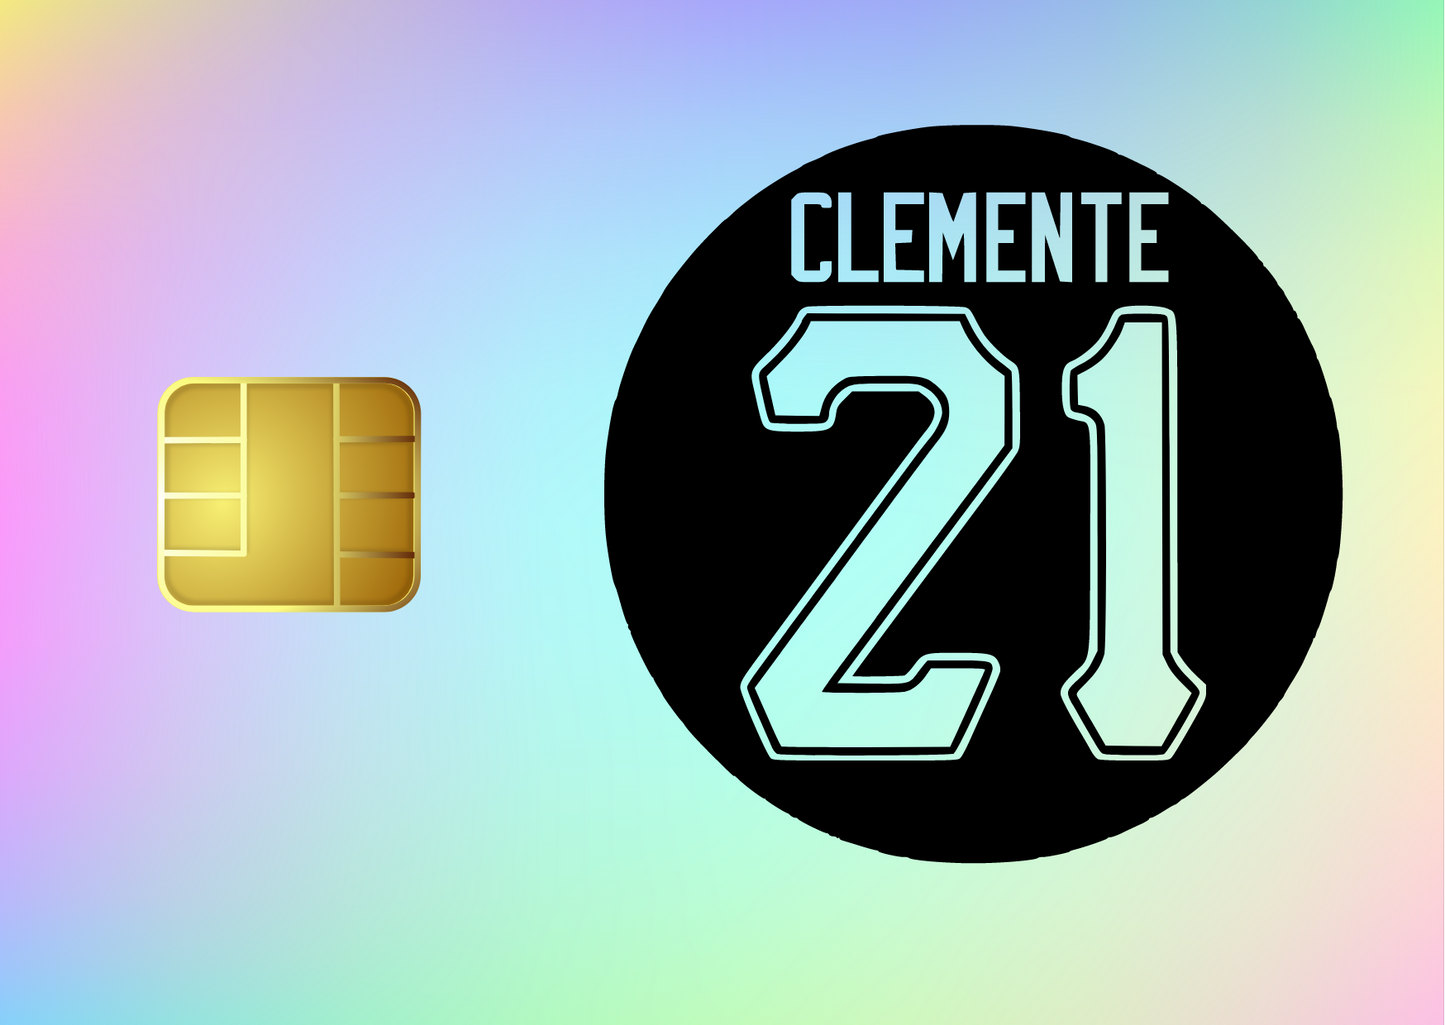 Clemente 21